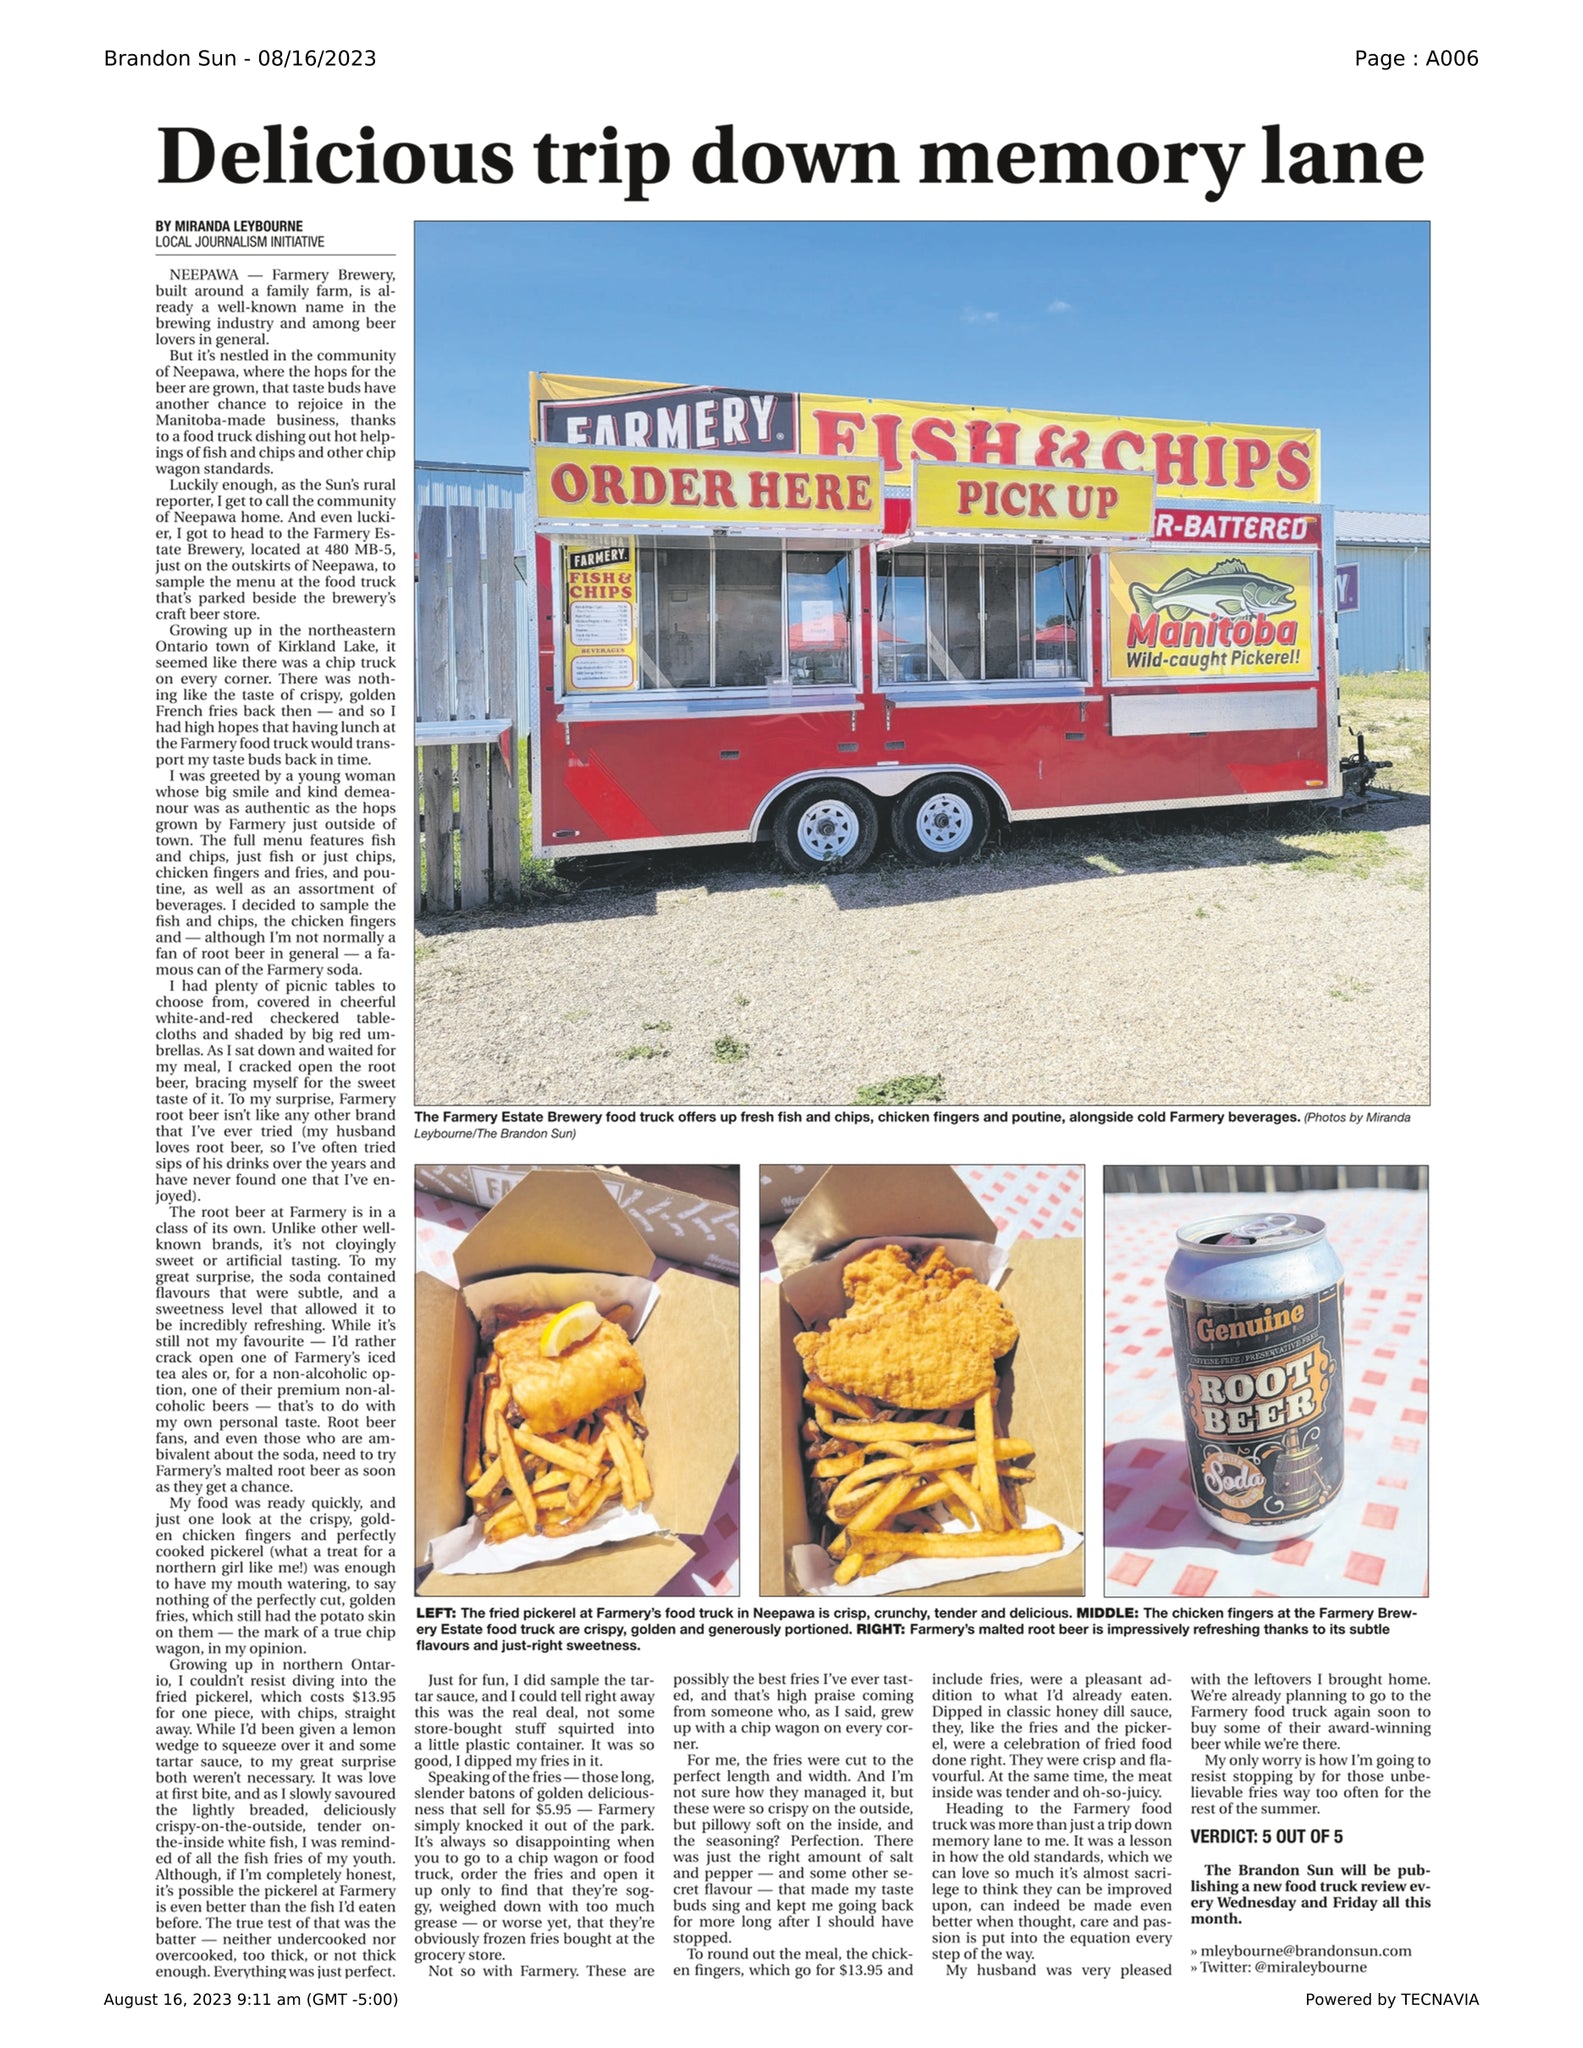 Brandon sun 5-star review of farmery food truck